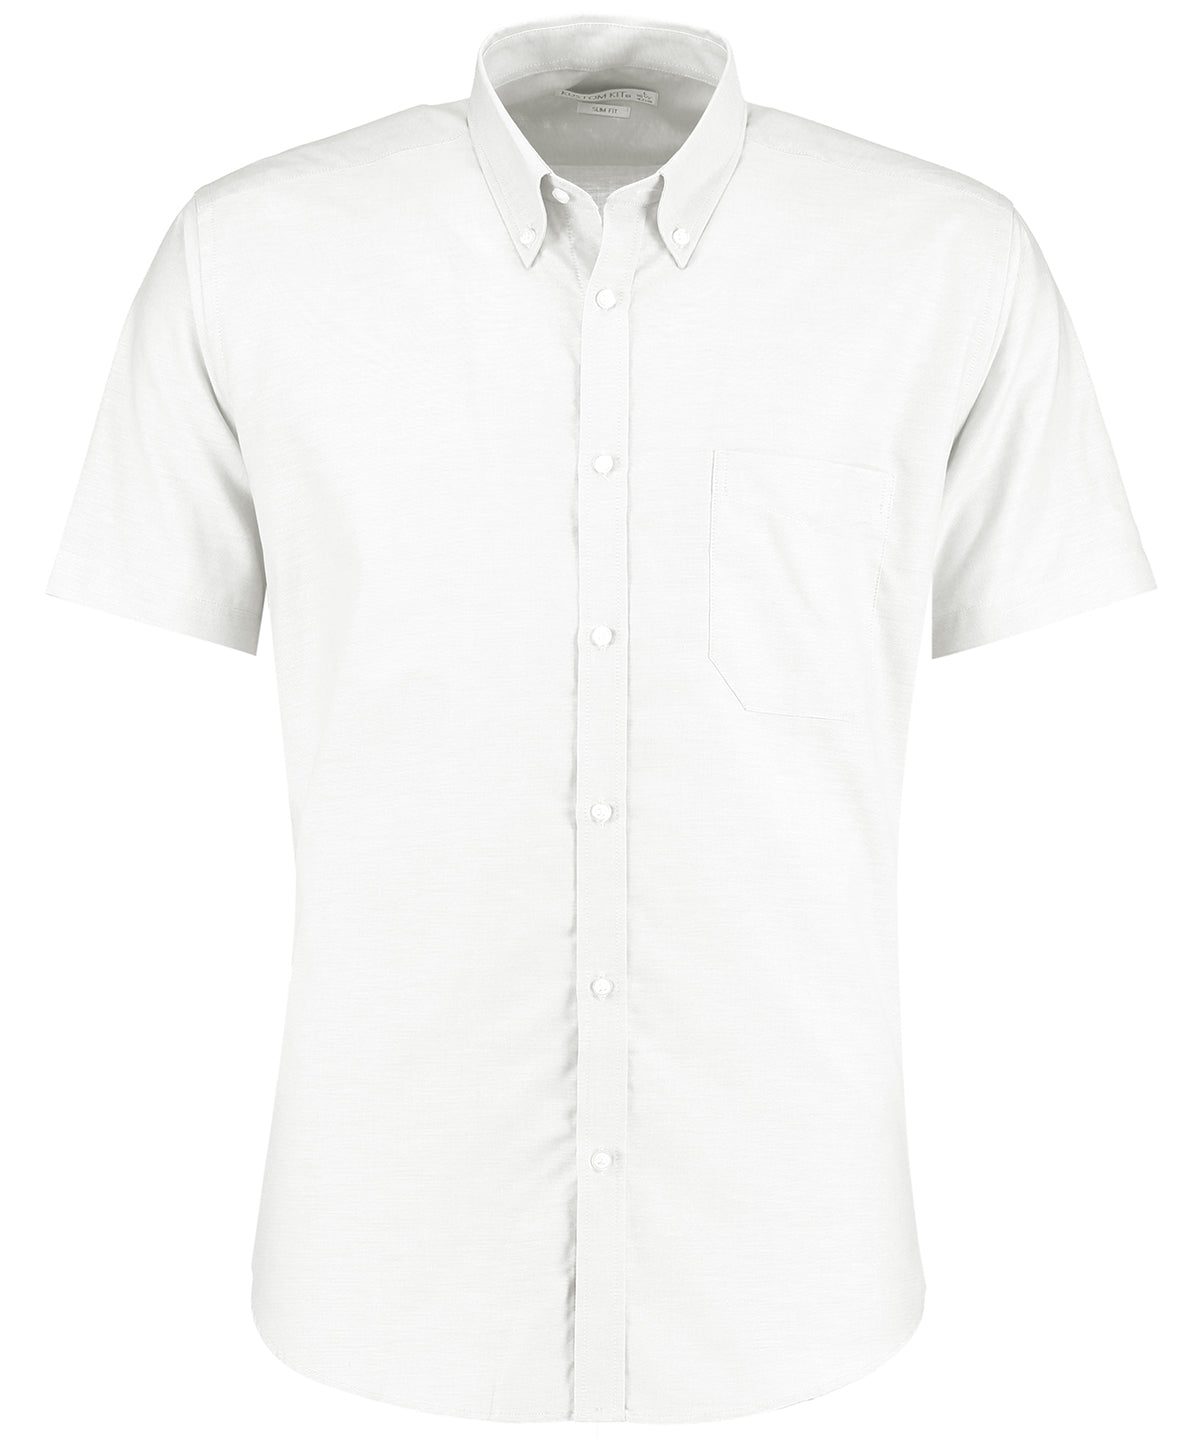 Bolir - Slim Fit Workwear Oxford Shirt Short Sleeve